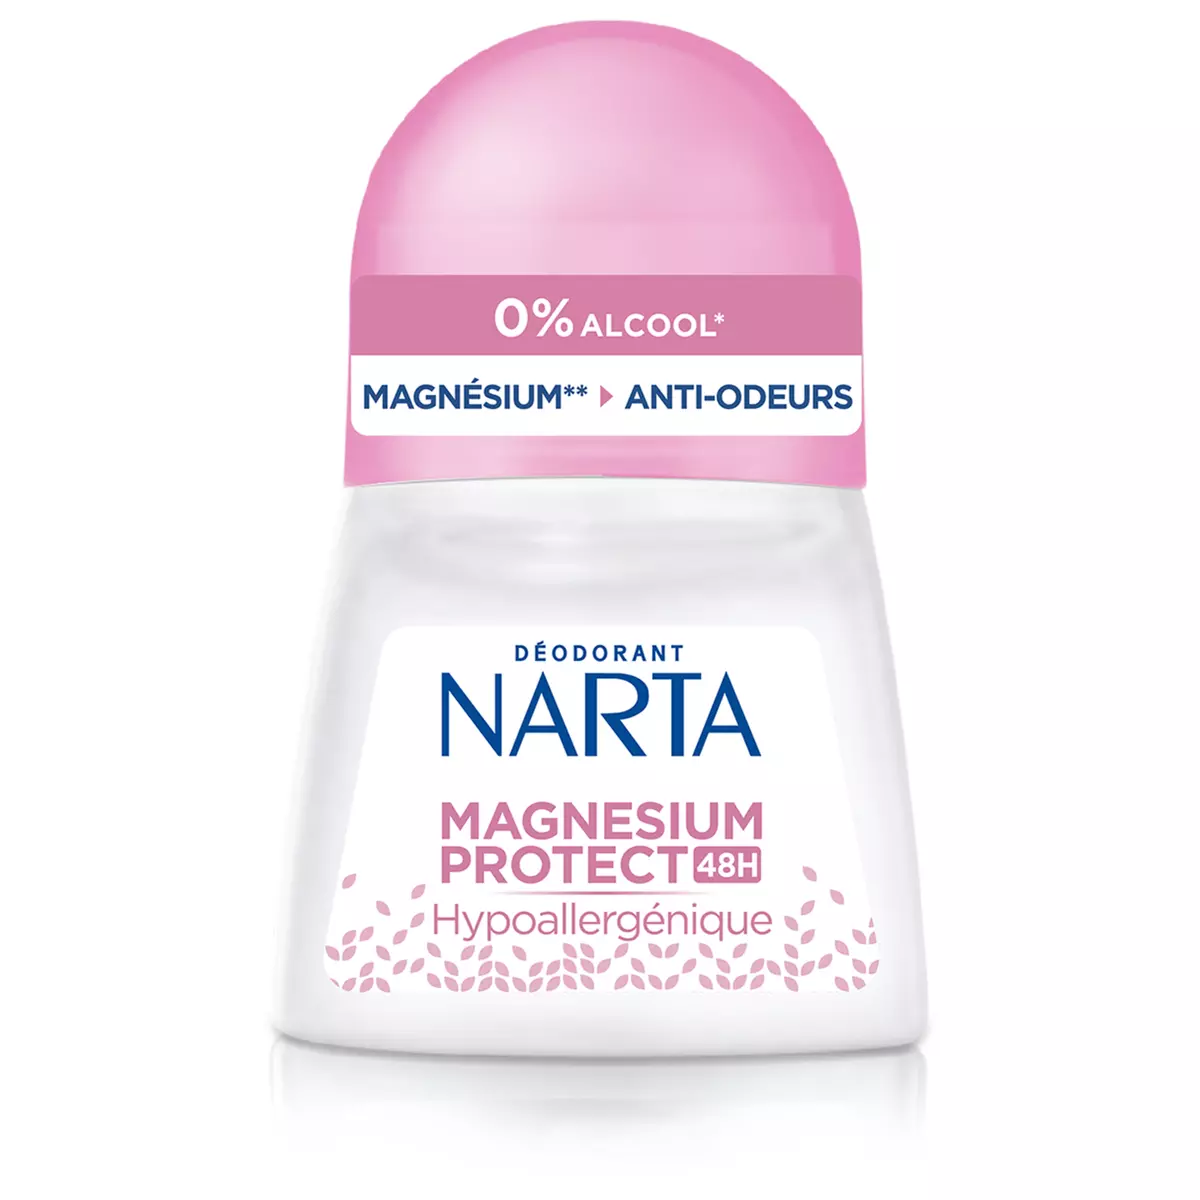 NARTA Déodorant bille 48h magnesium protect anti-odeurs 50ml